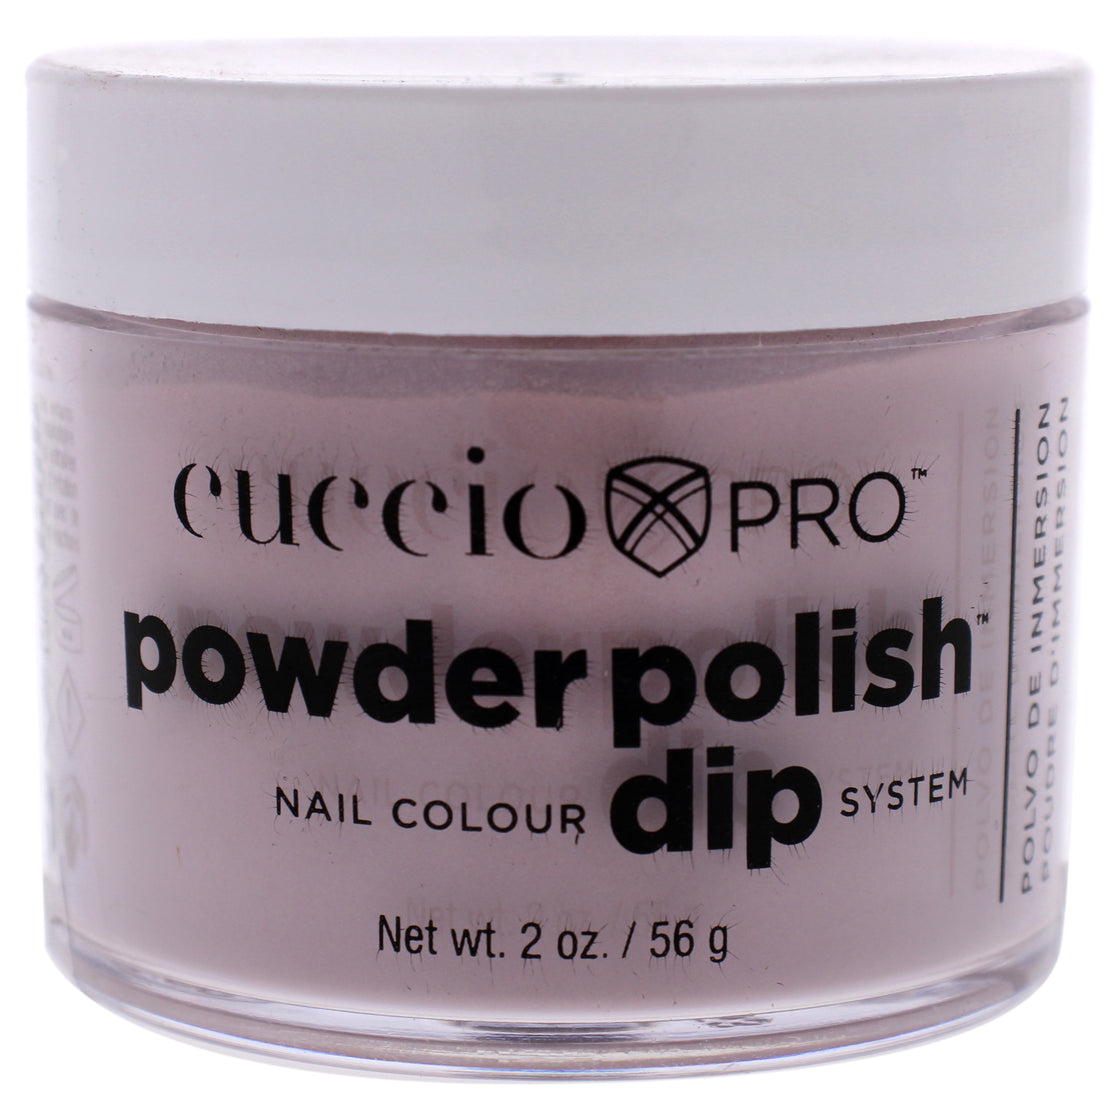 Pro Powder Polish Nail Colour Dip System - Nude-A-Tude by Cuccio Colour for Women - 1.6 oz Nail Powder